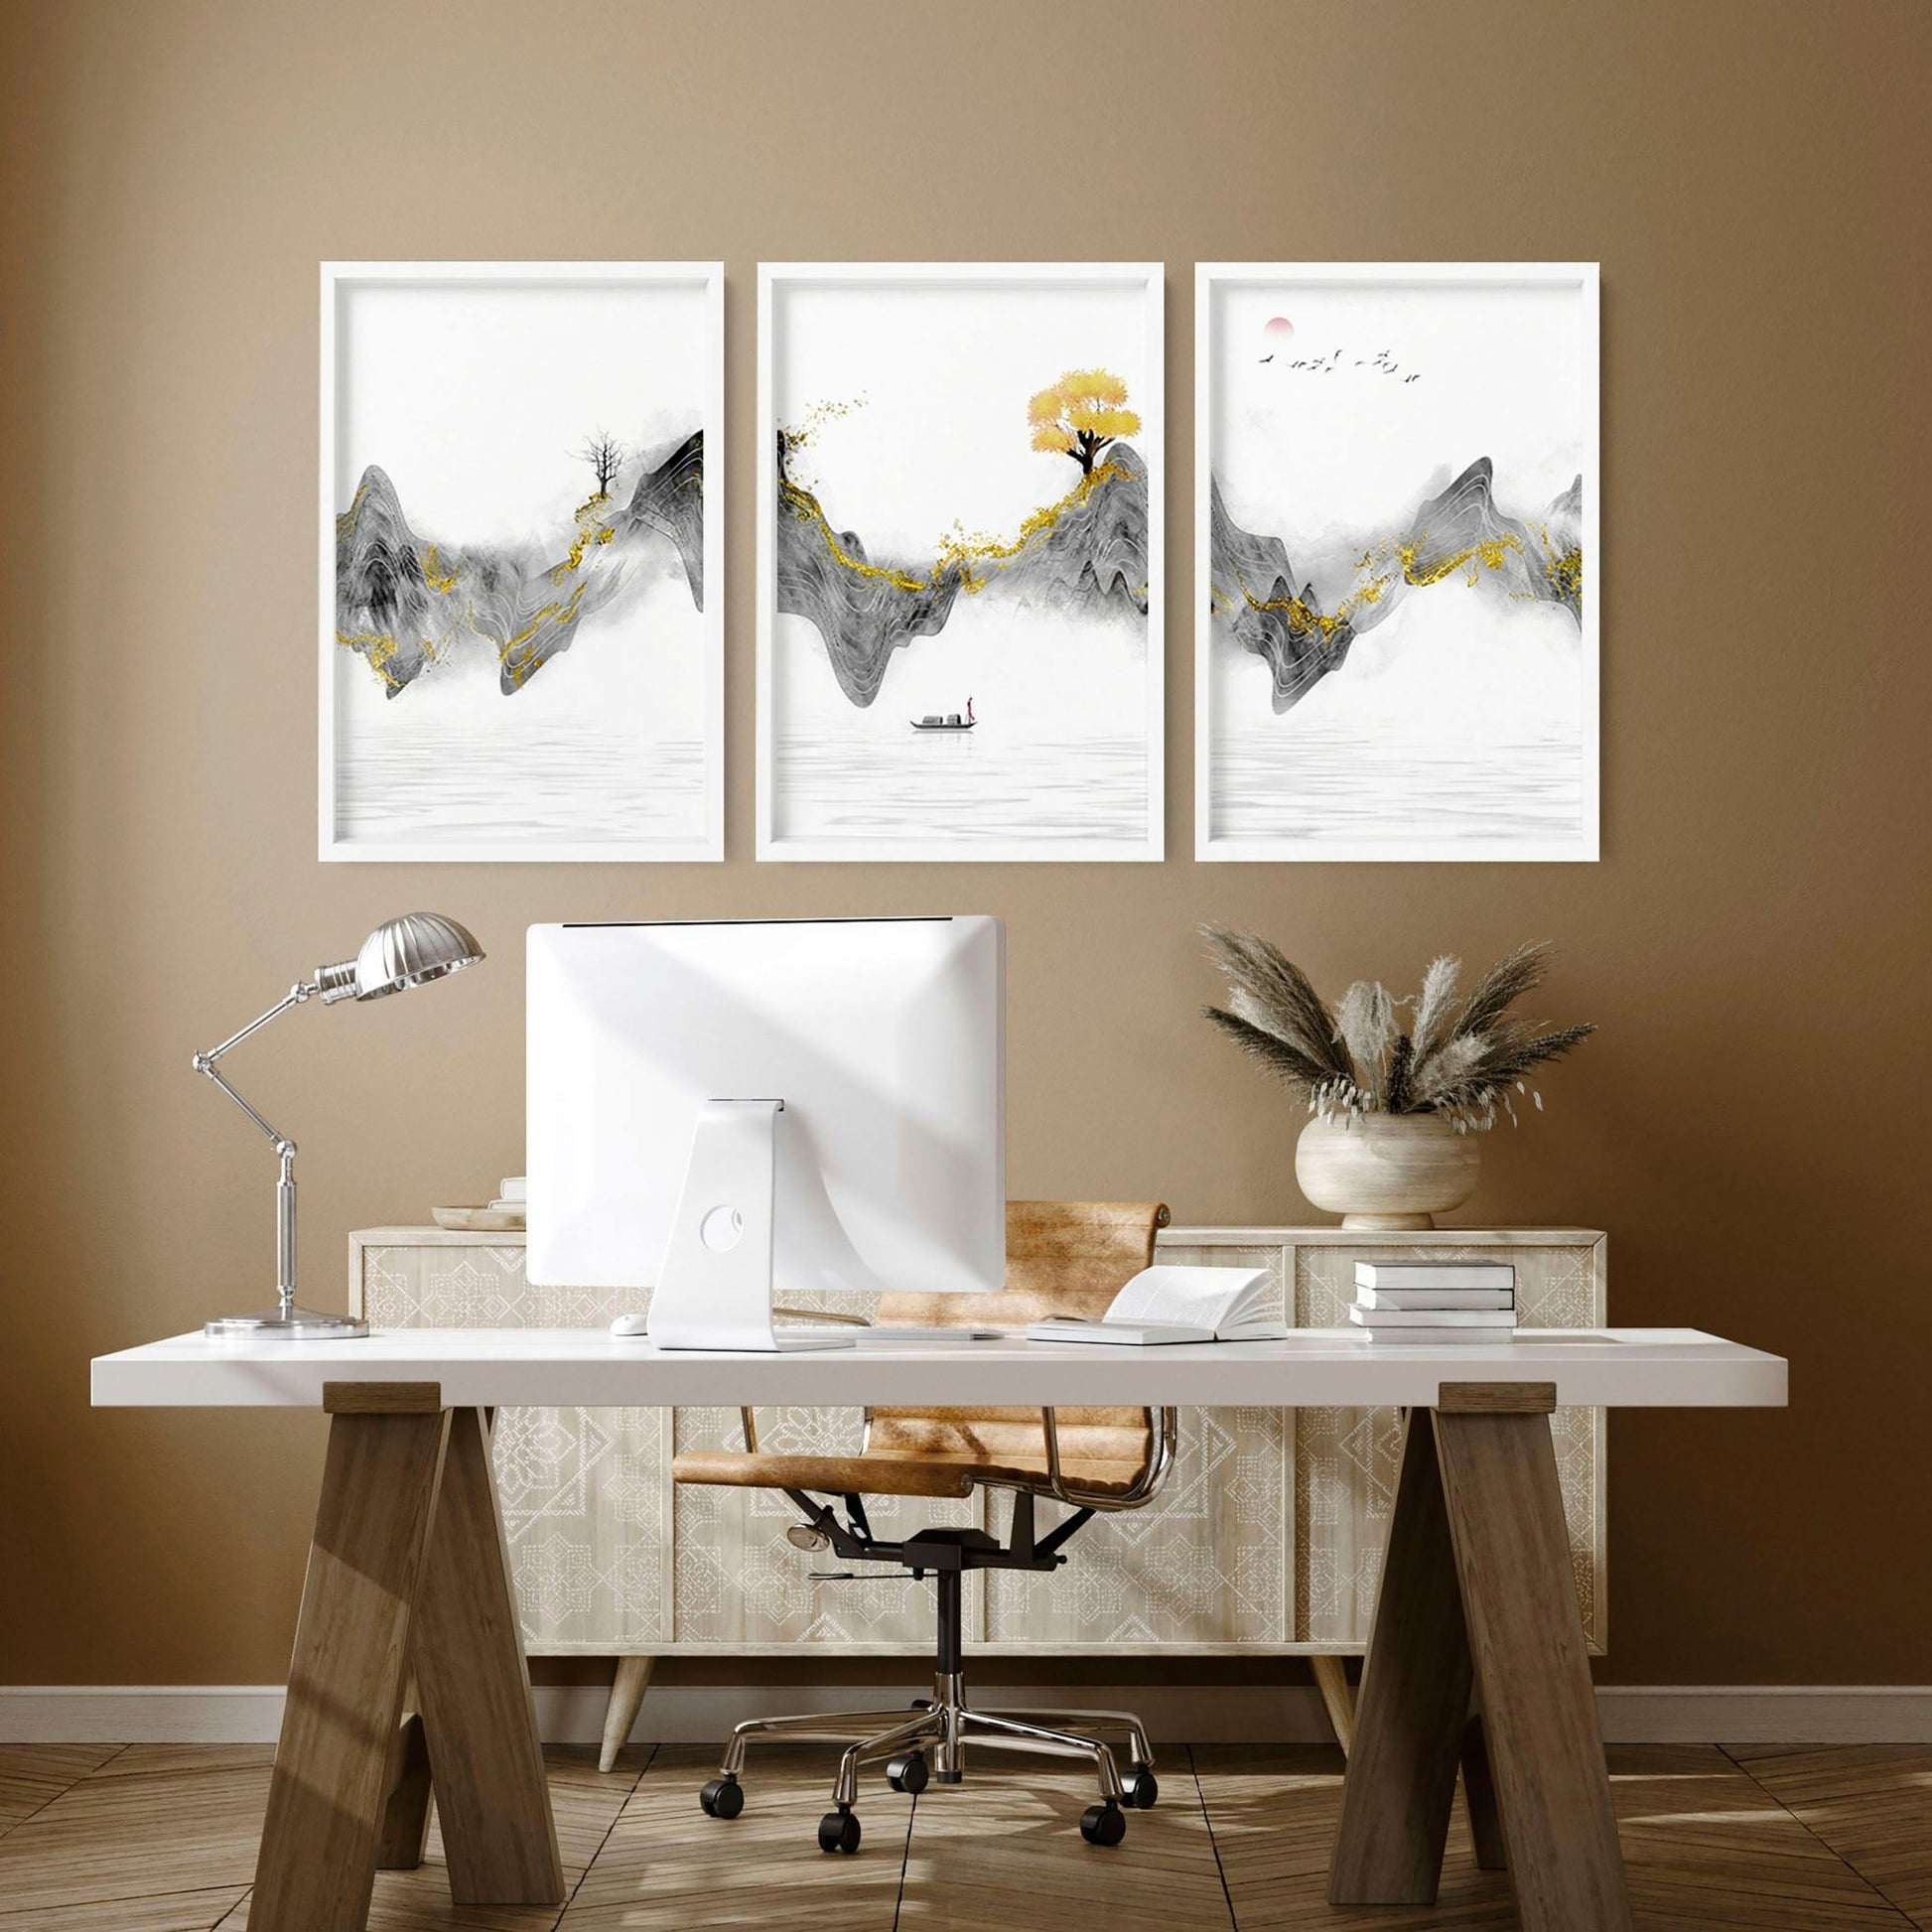 Zen decor for office | set of 3 wall art prints - About Wall Art